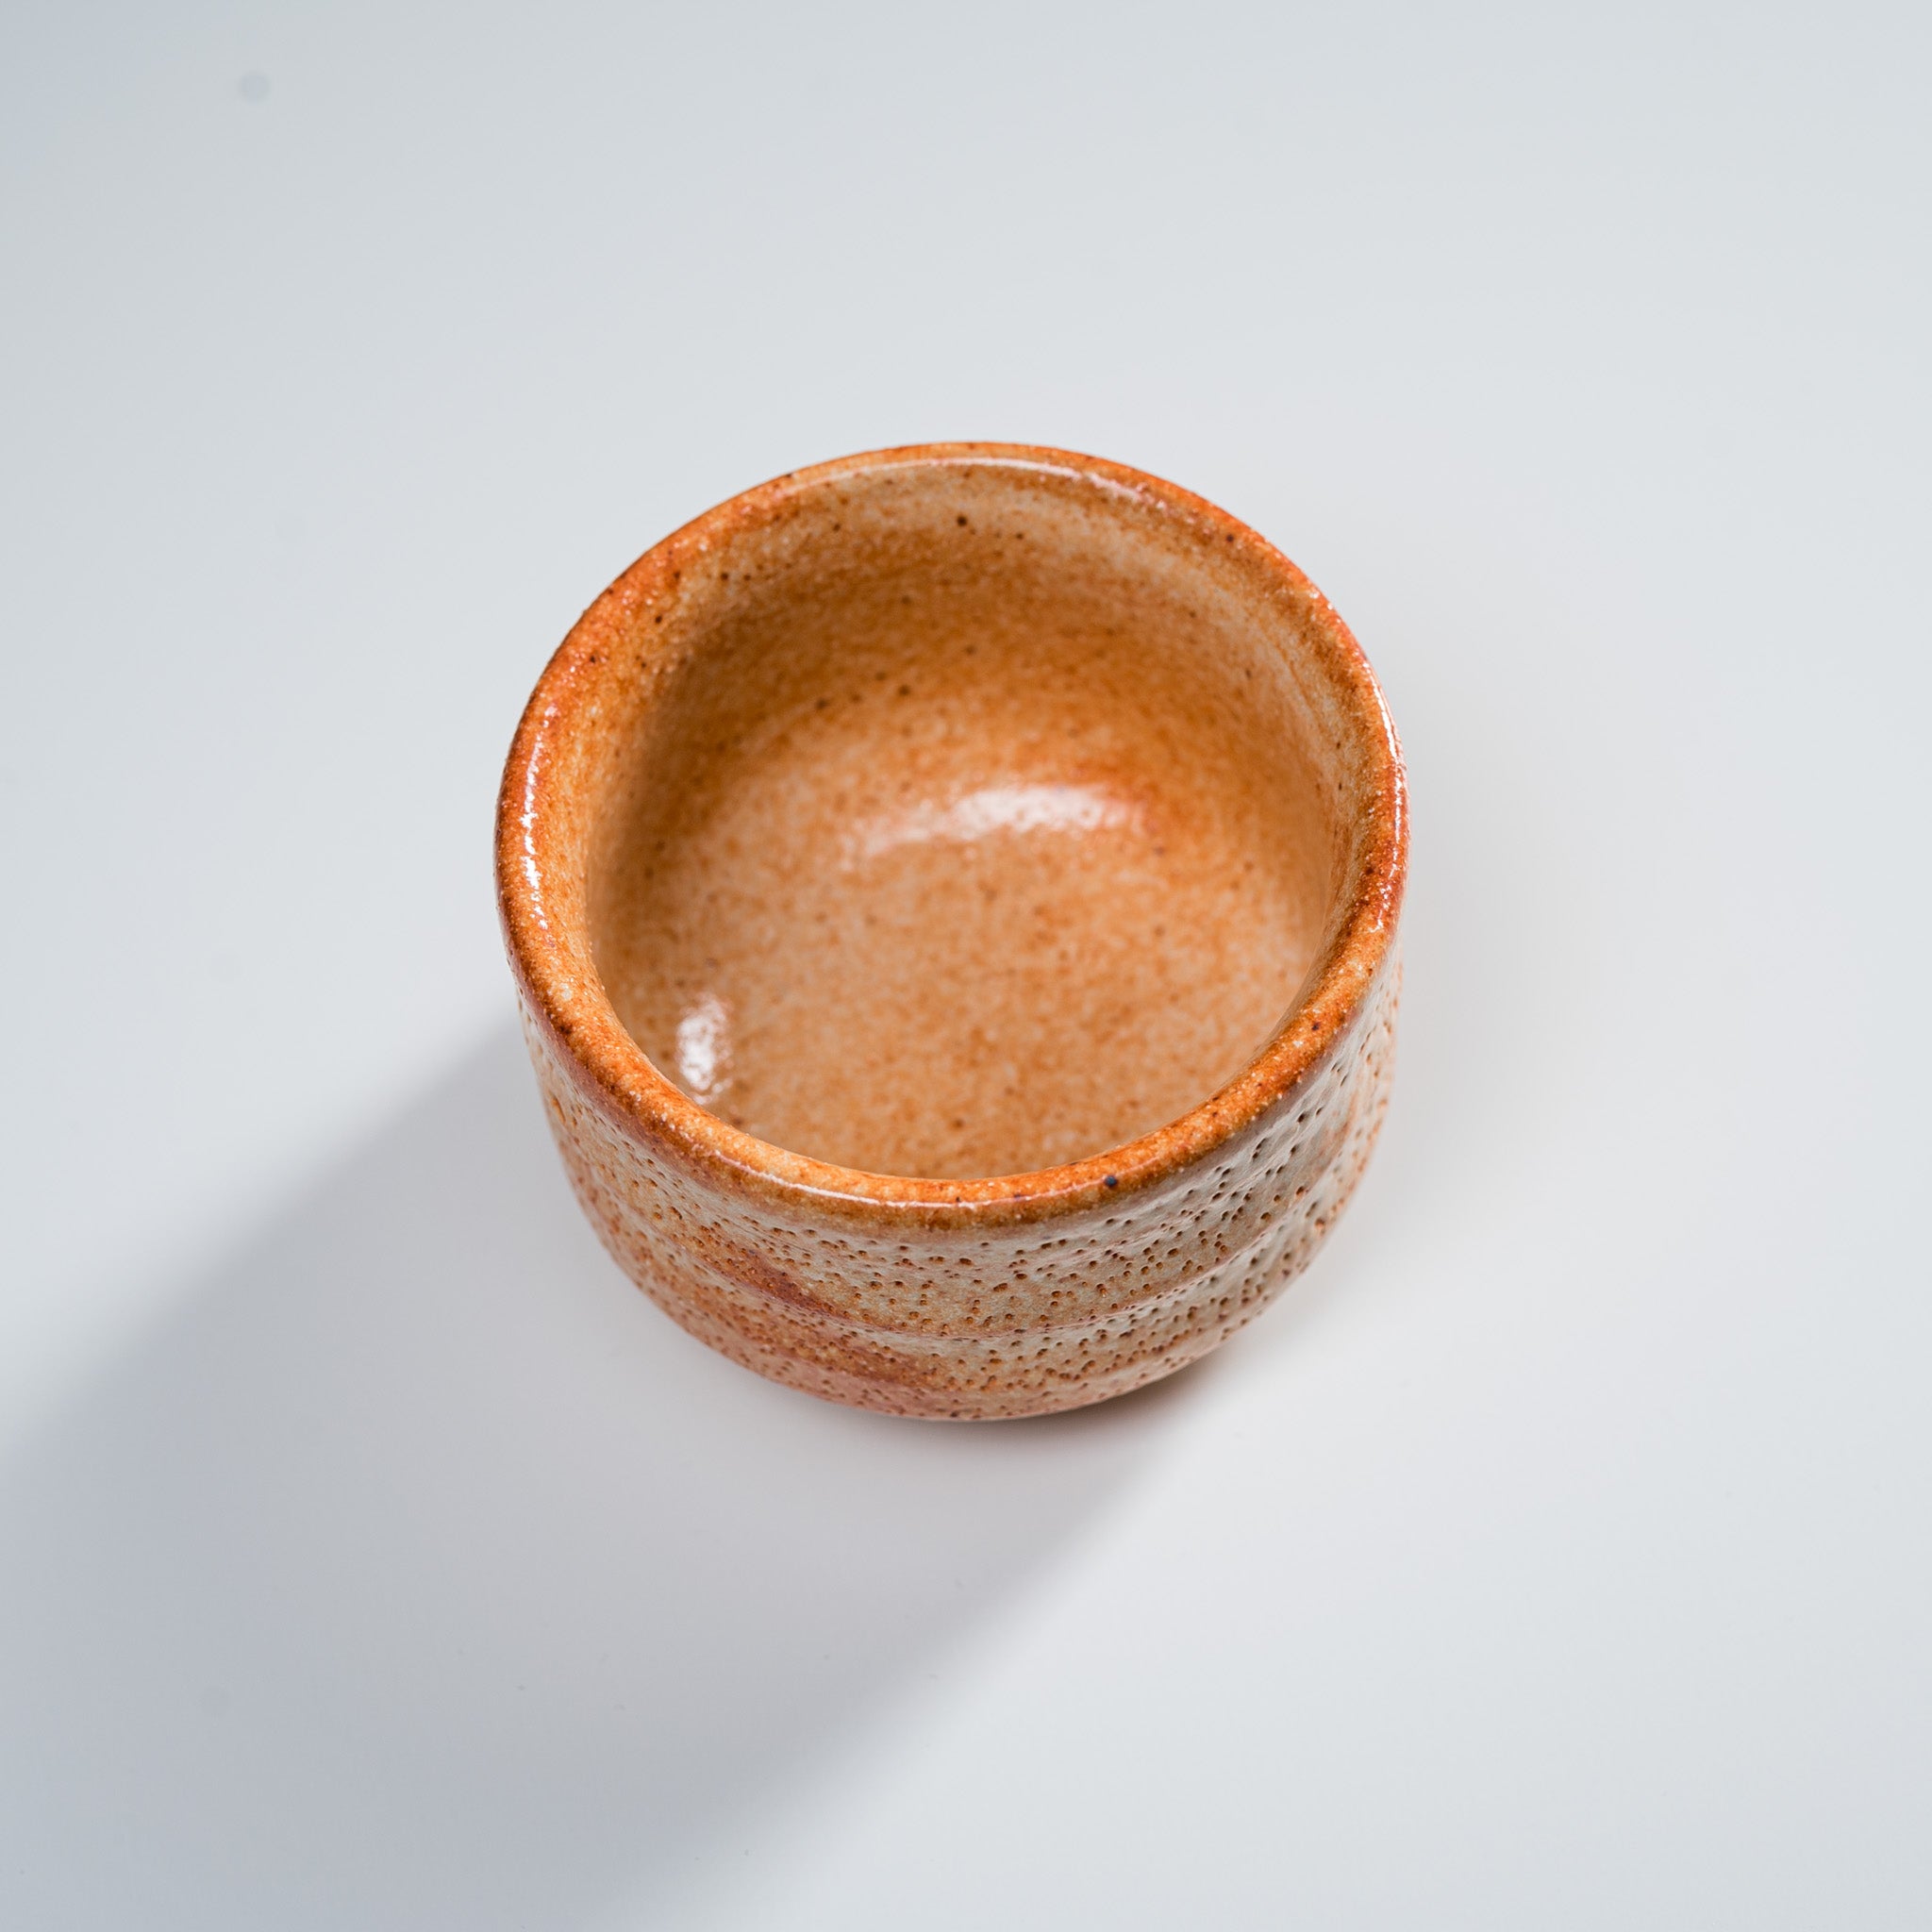 Mino ware Pottery Sake Cup / Teacup - Citrus / 美濃焼き ぐい呑み